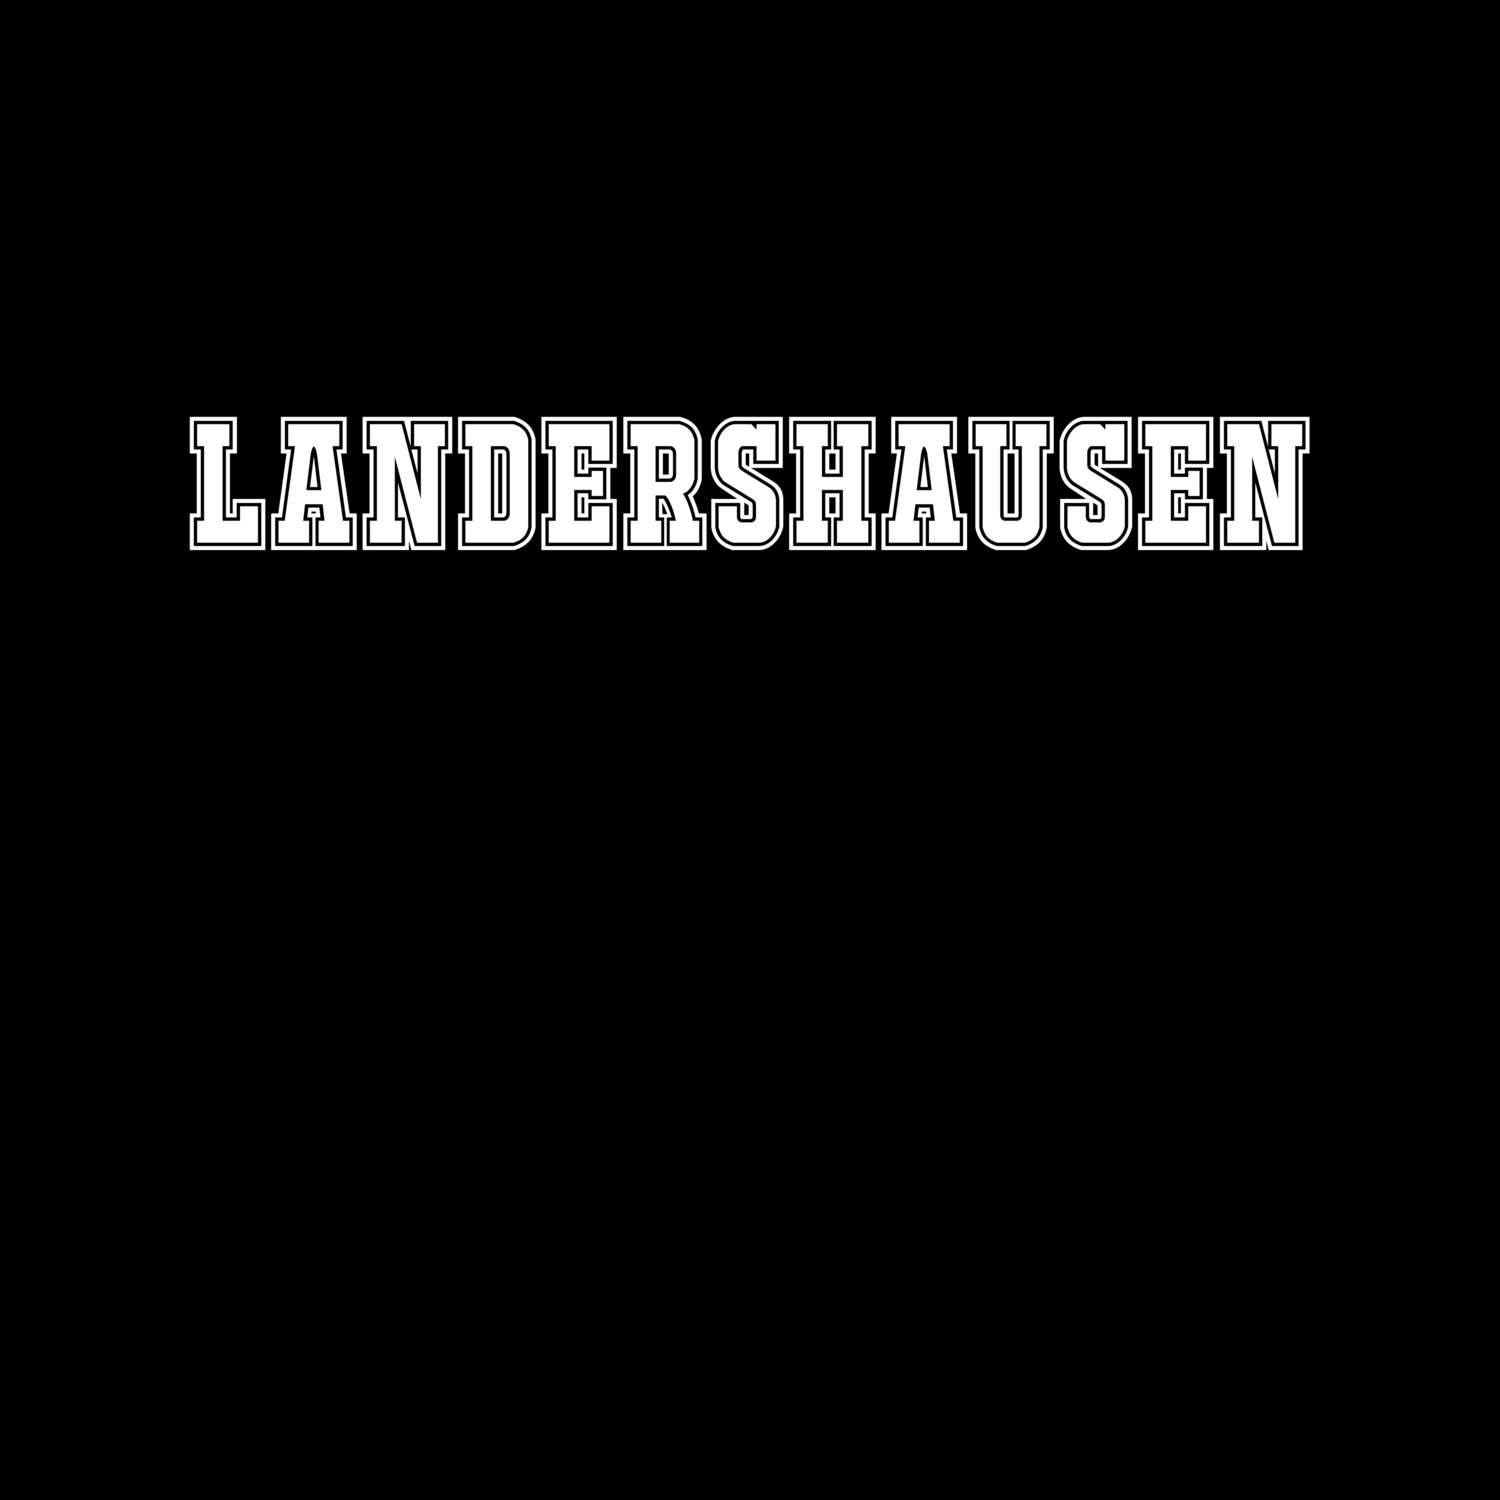 Landershausen T-Shirt »Classic«